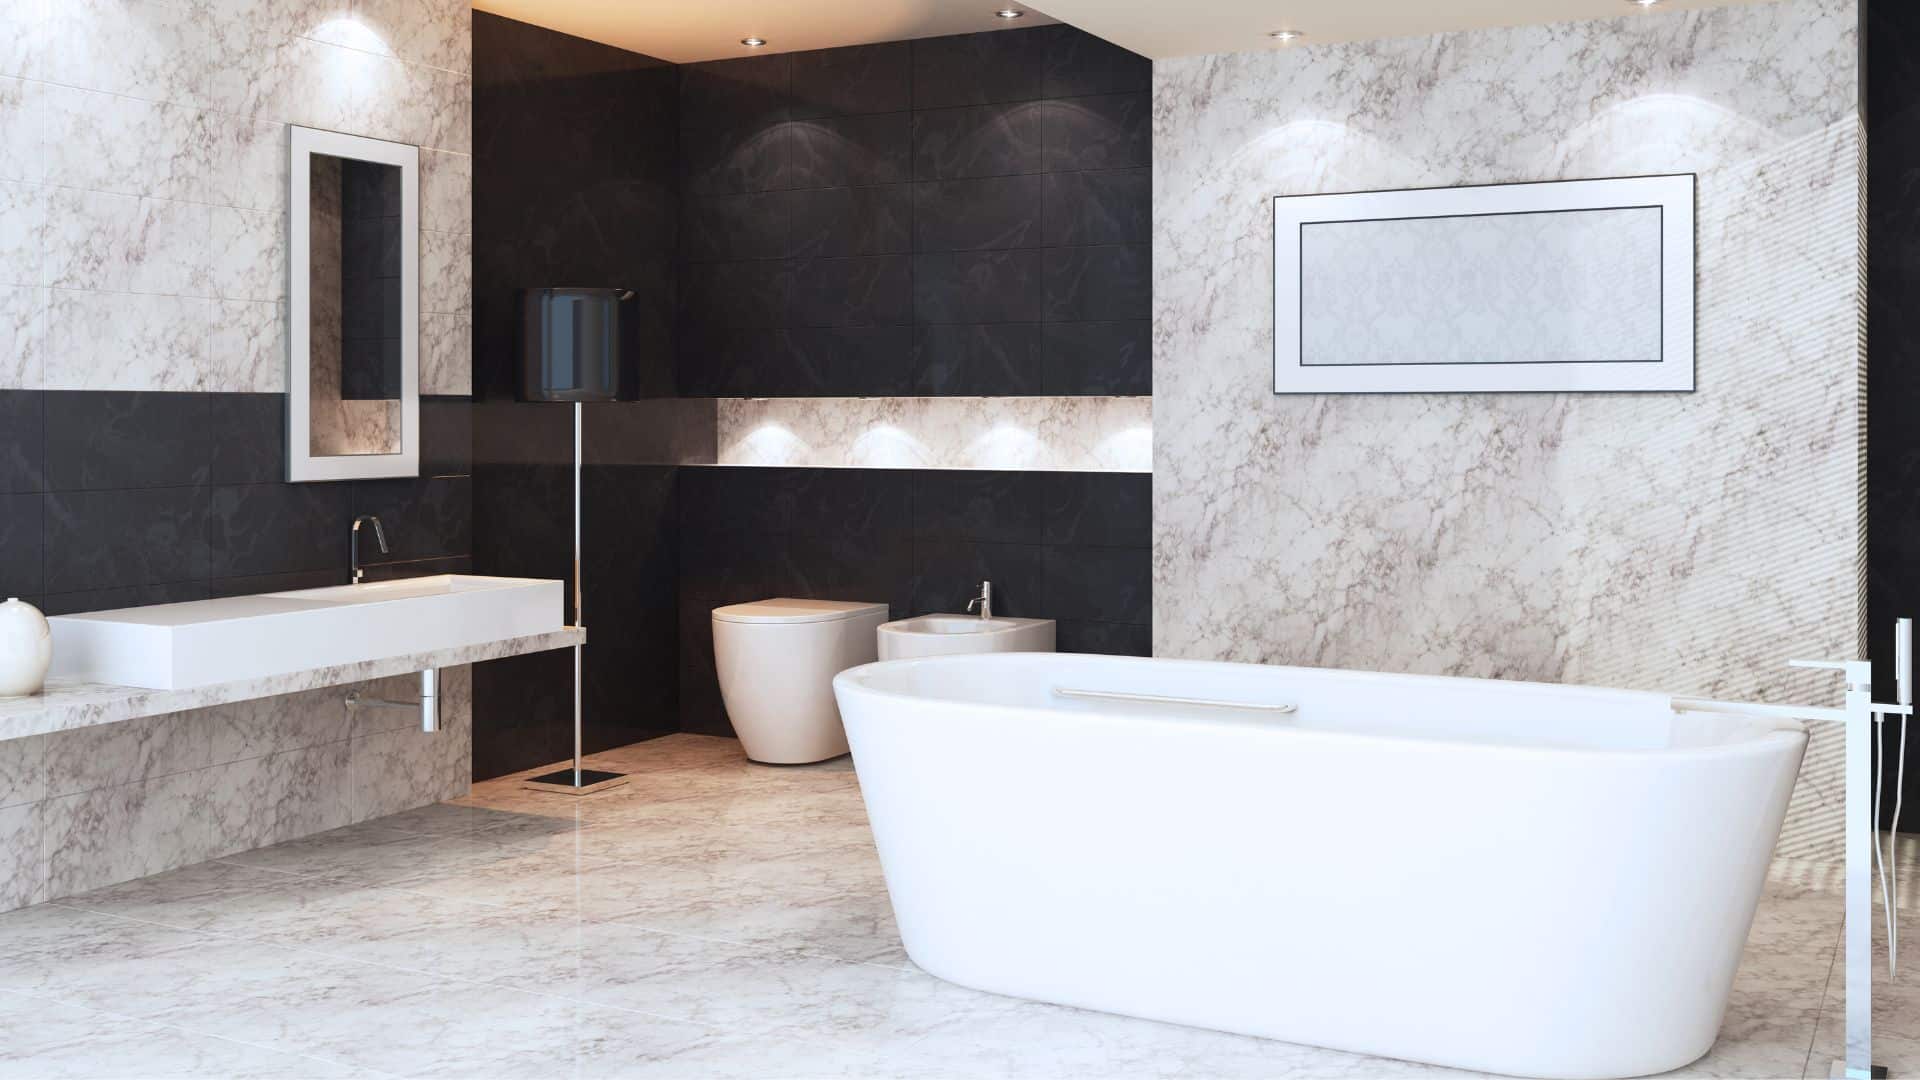 Spacious, luxury bathroom with tub, toilet and vanity